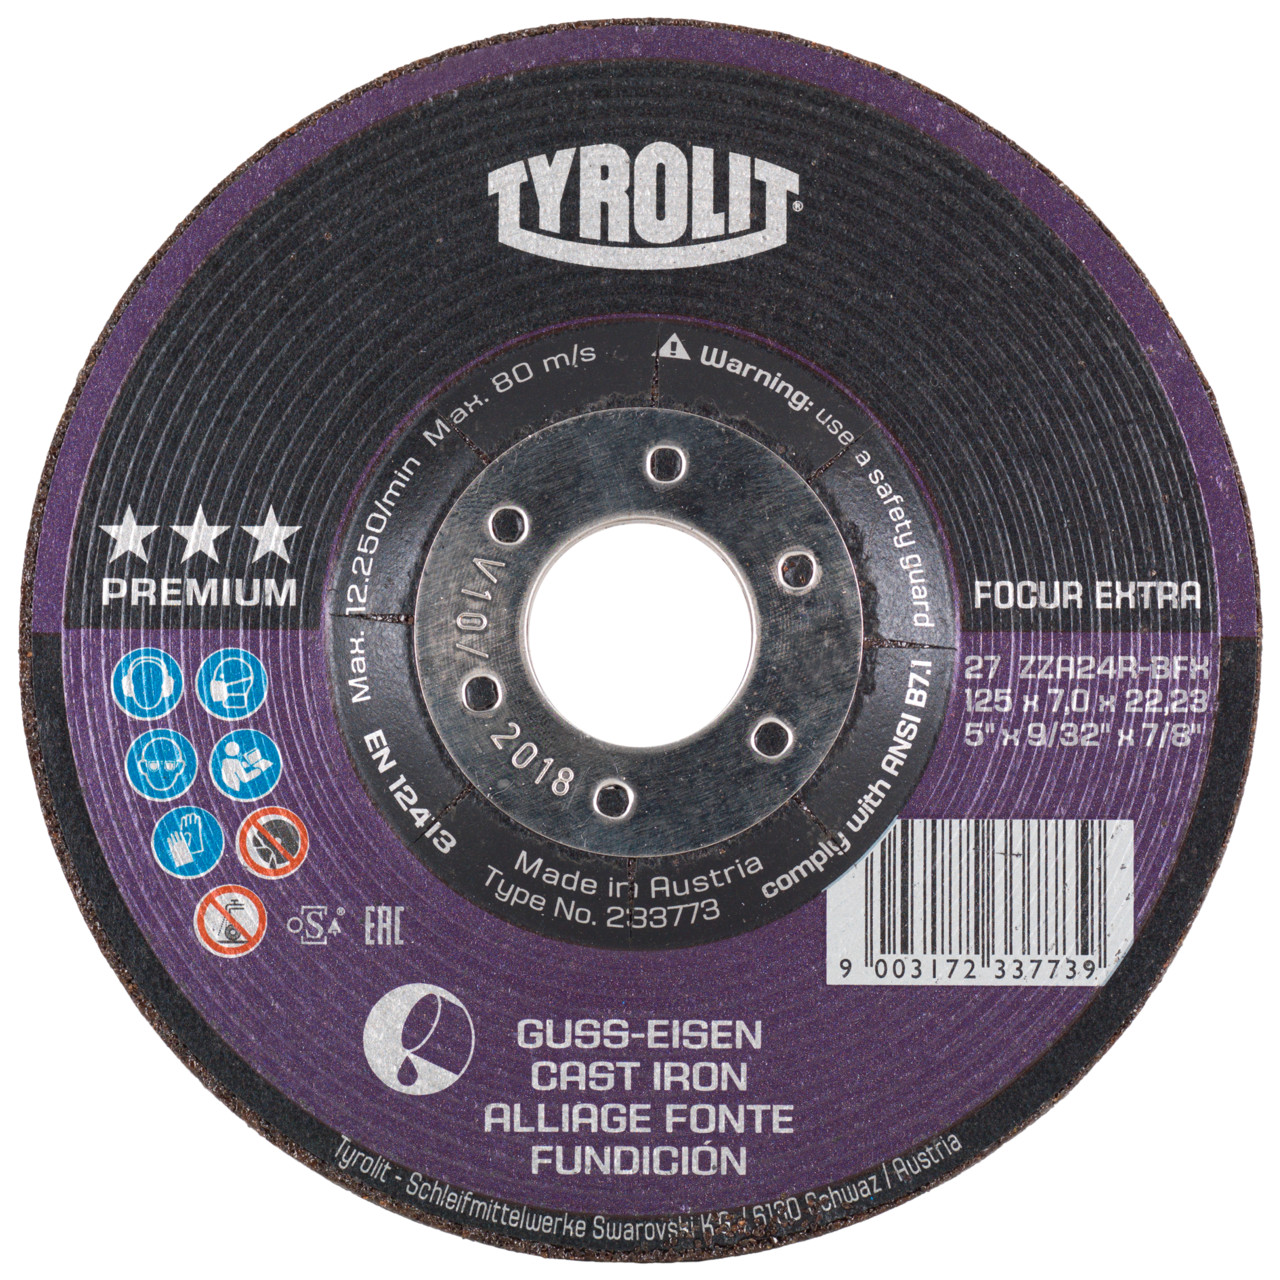 Tyrolit Roughing disc DxUxH 125x7x22.23 FOCUR Extra for cast iron, shape: 27 - offset version, Art. 233773